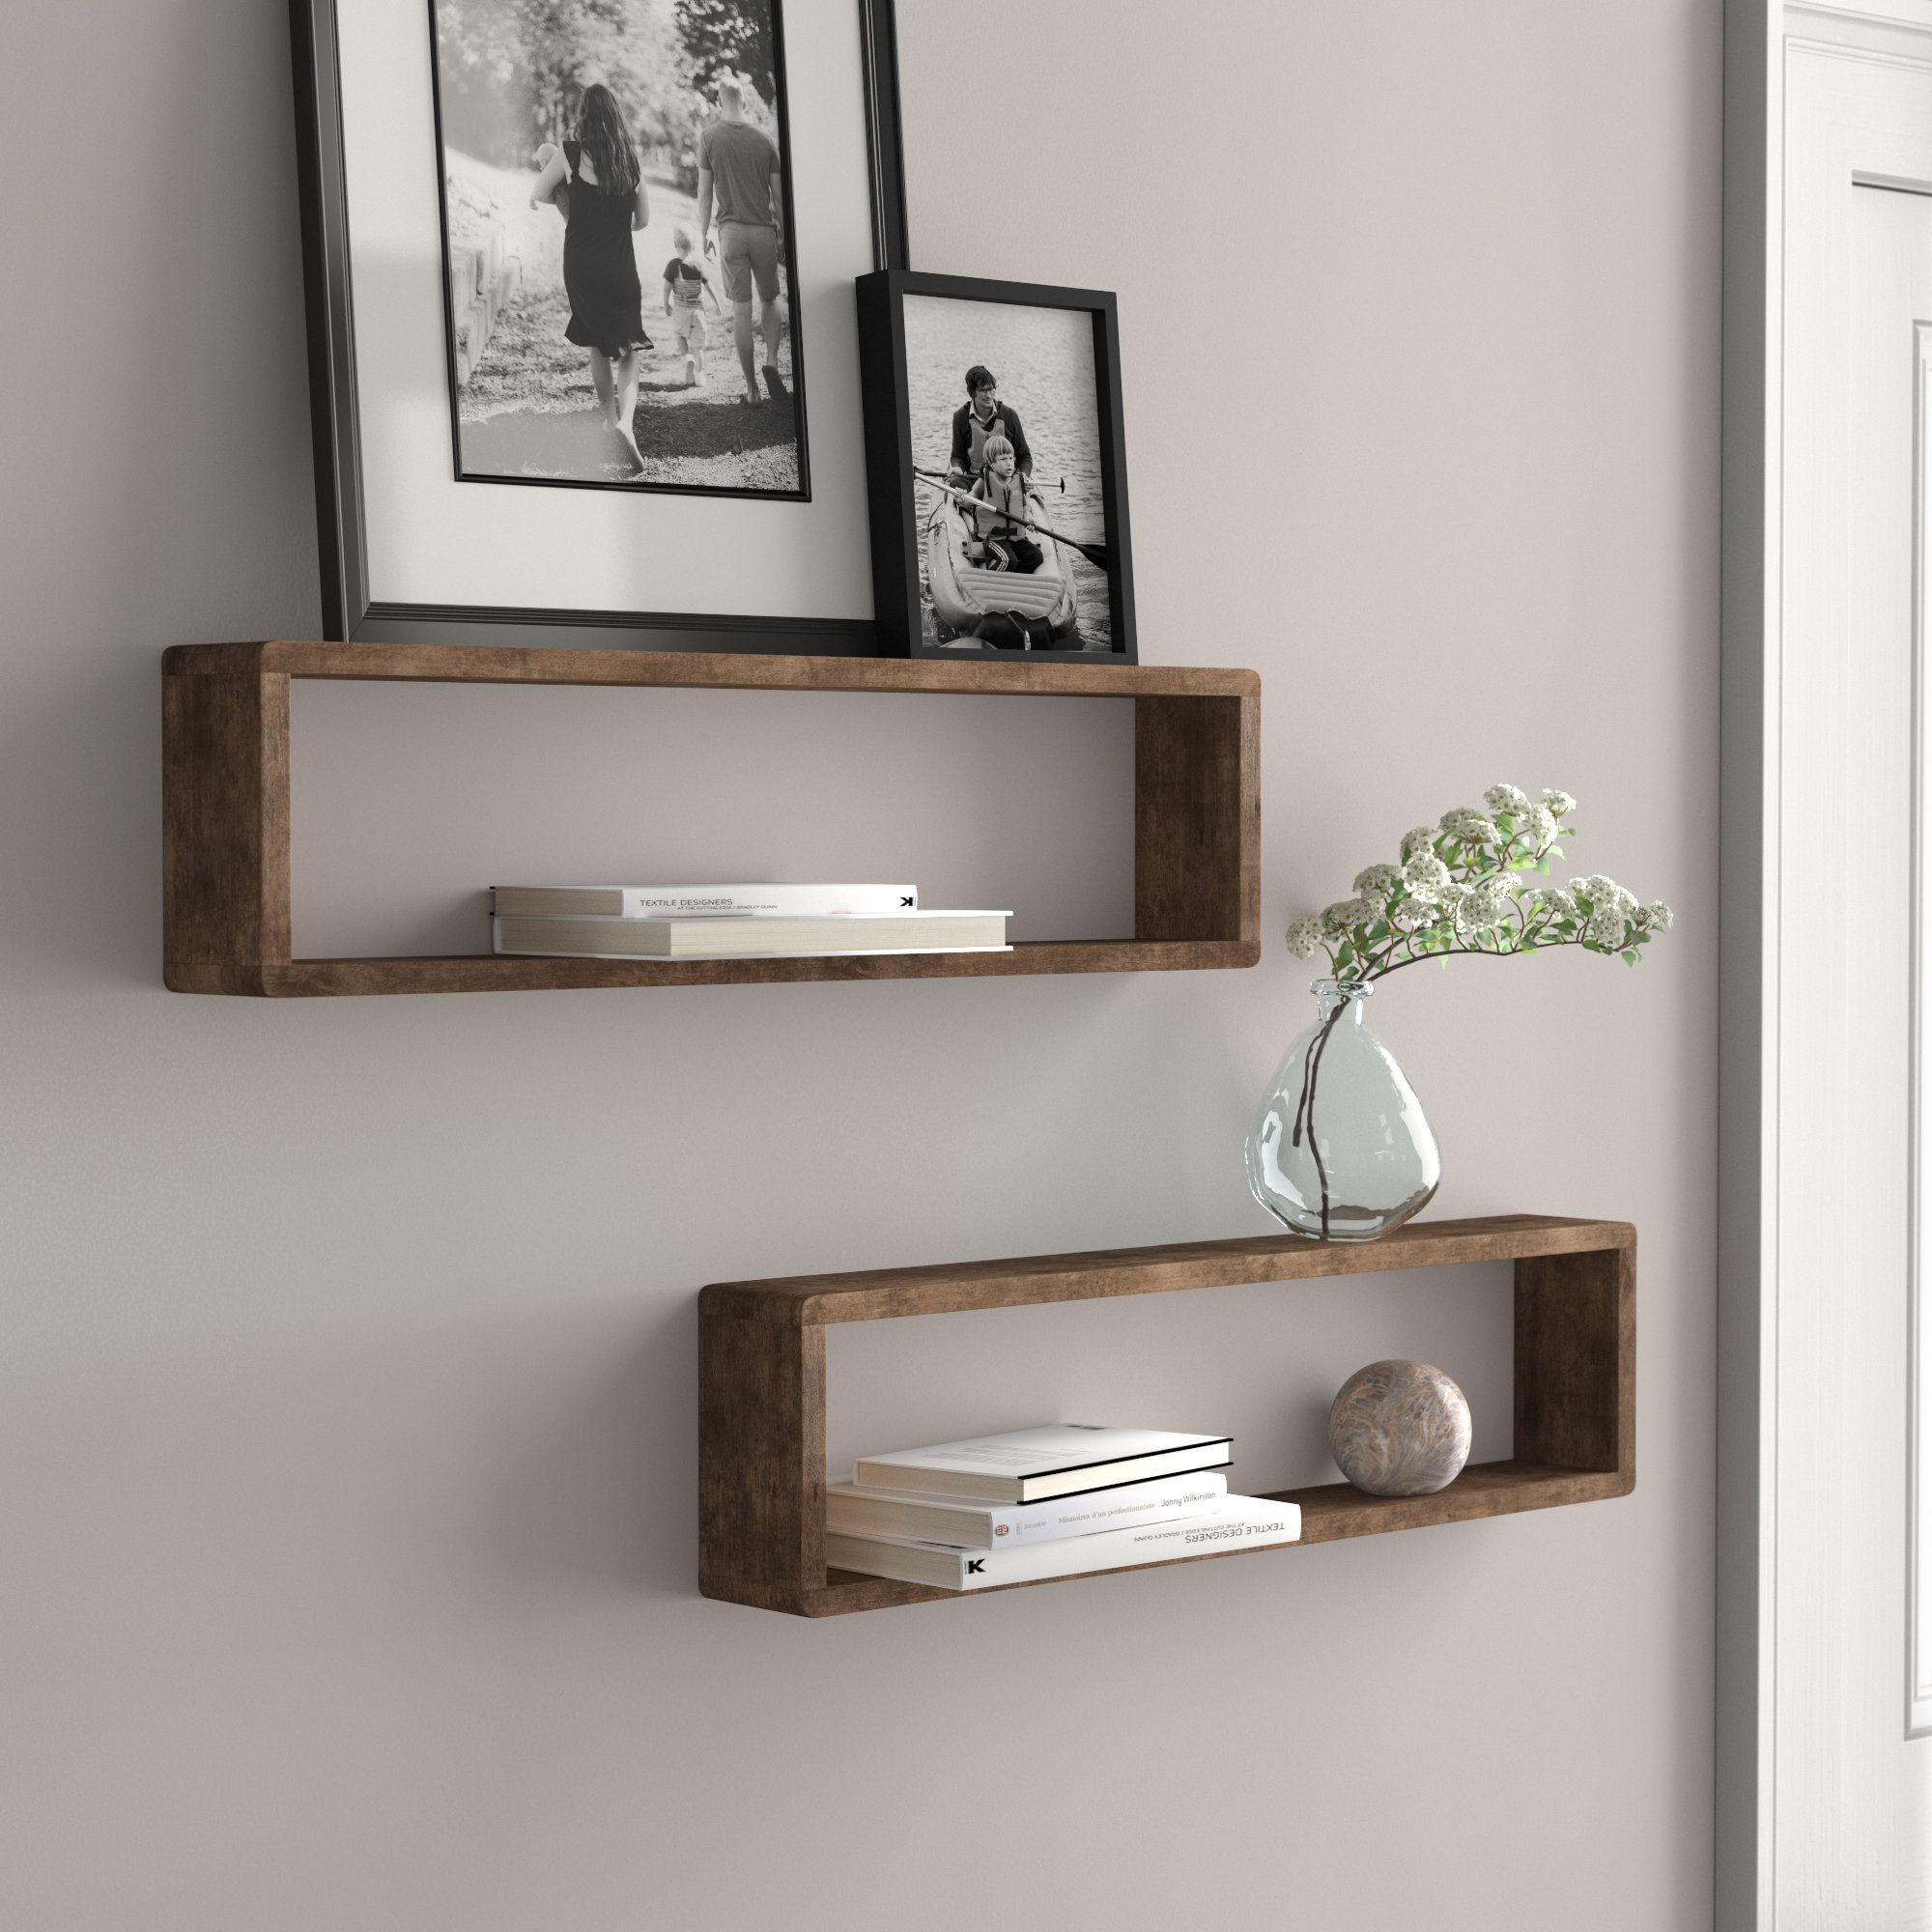 Wall & Display Shelves You'll Love